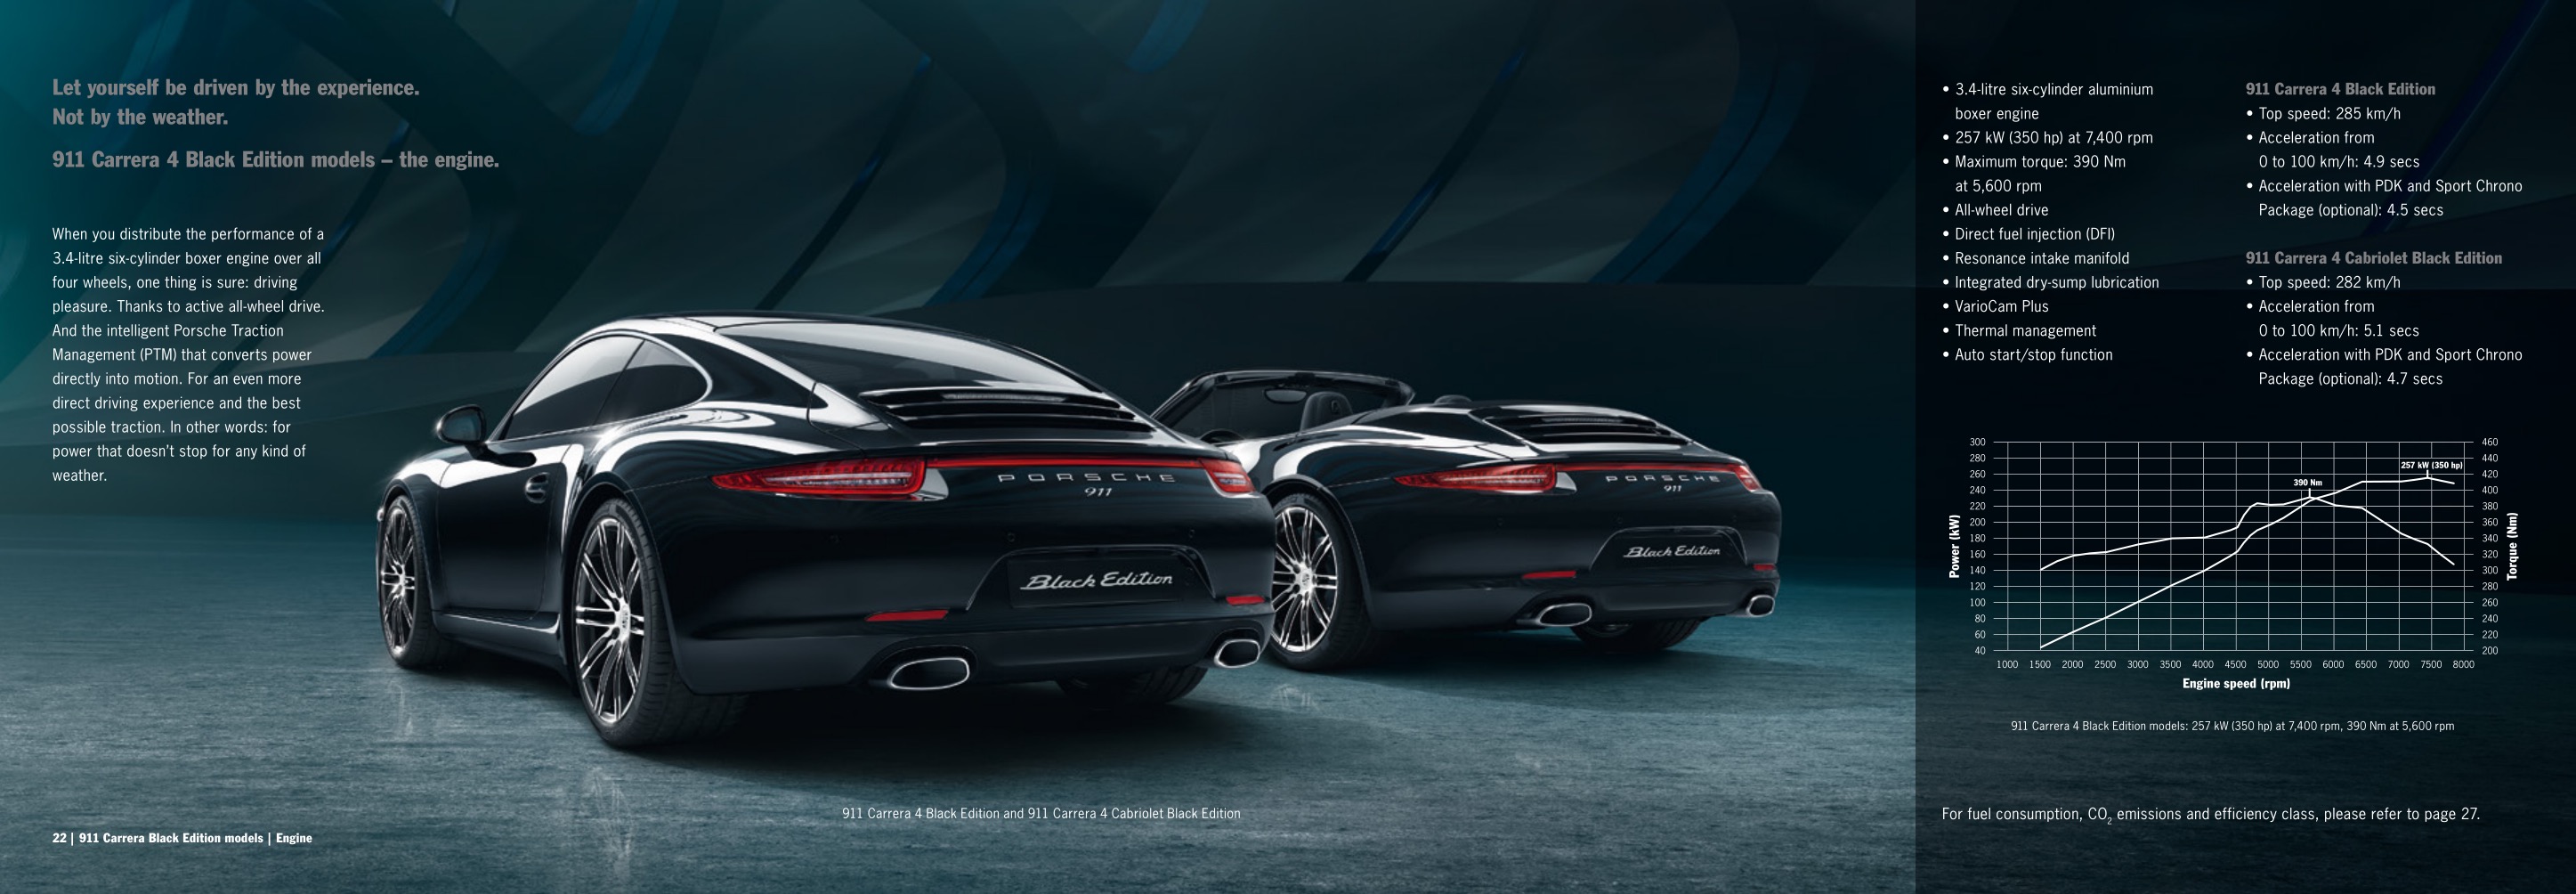 2015 Porsche Black Edition Brochure Page 7